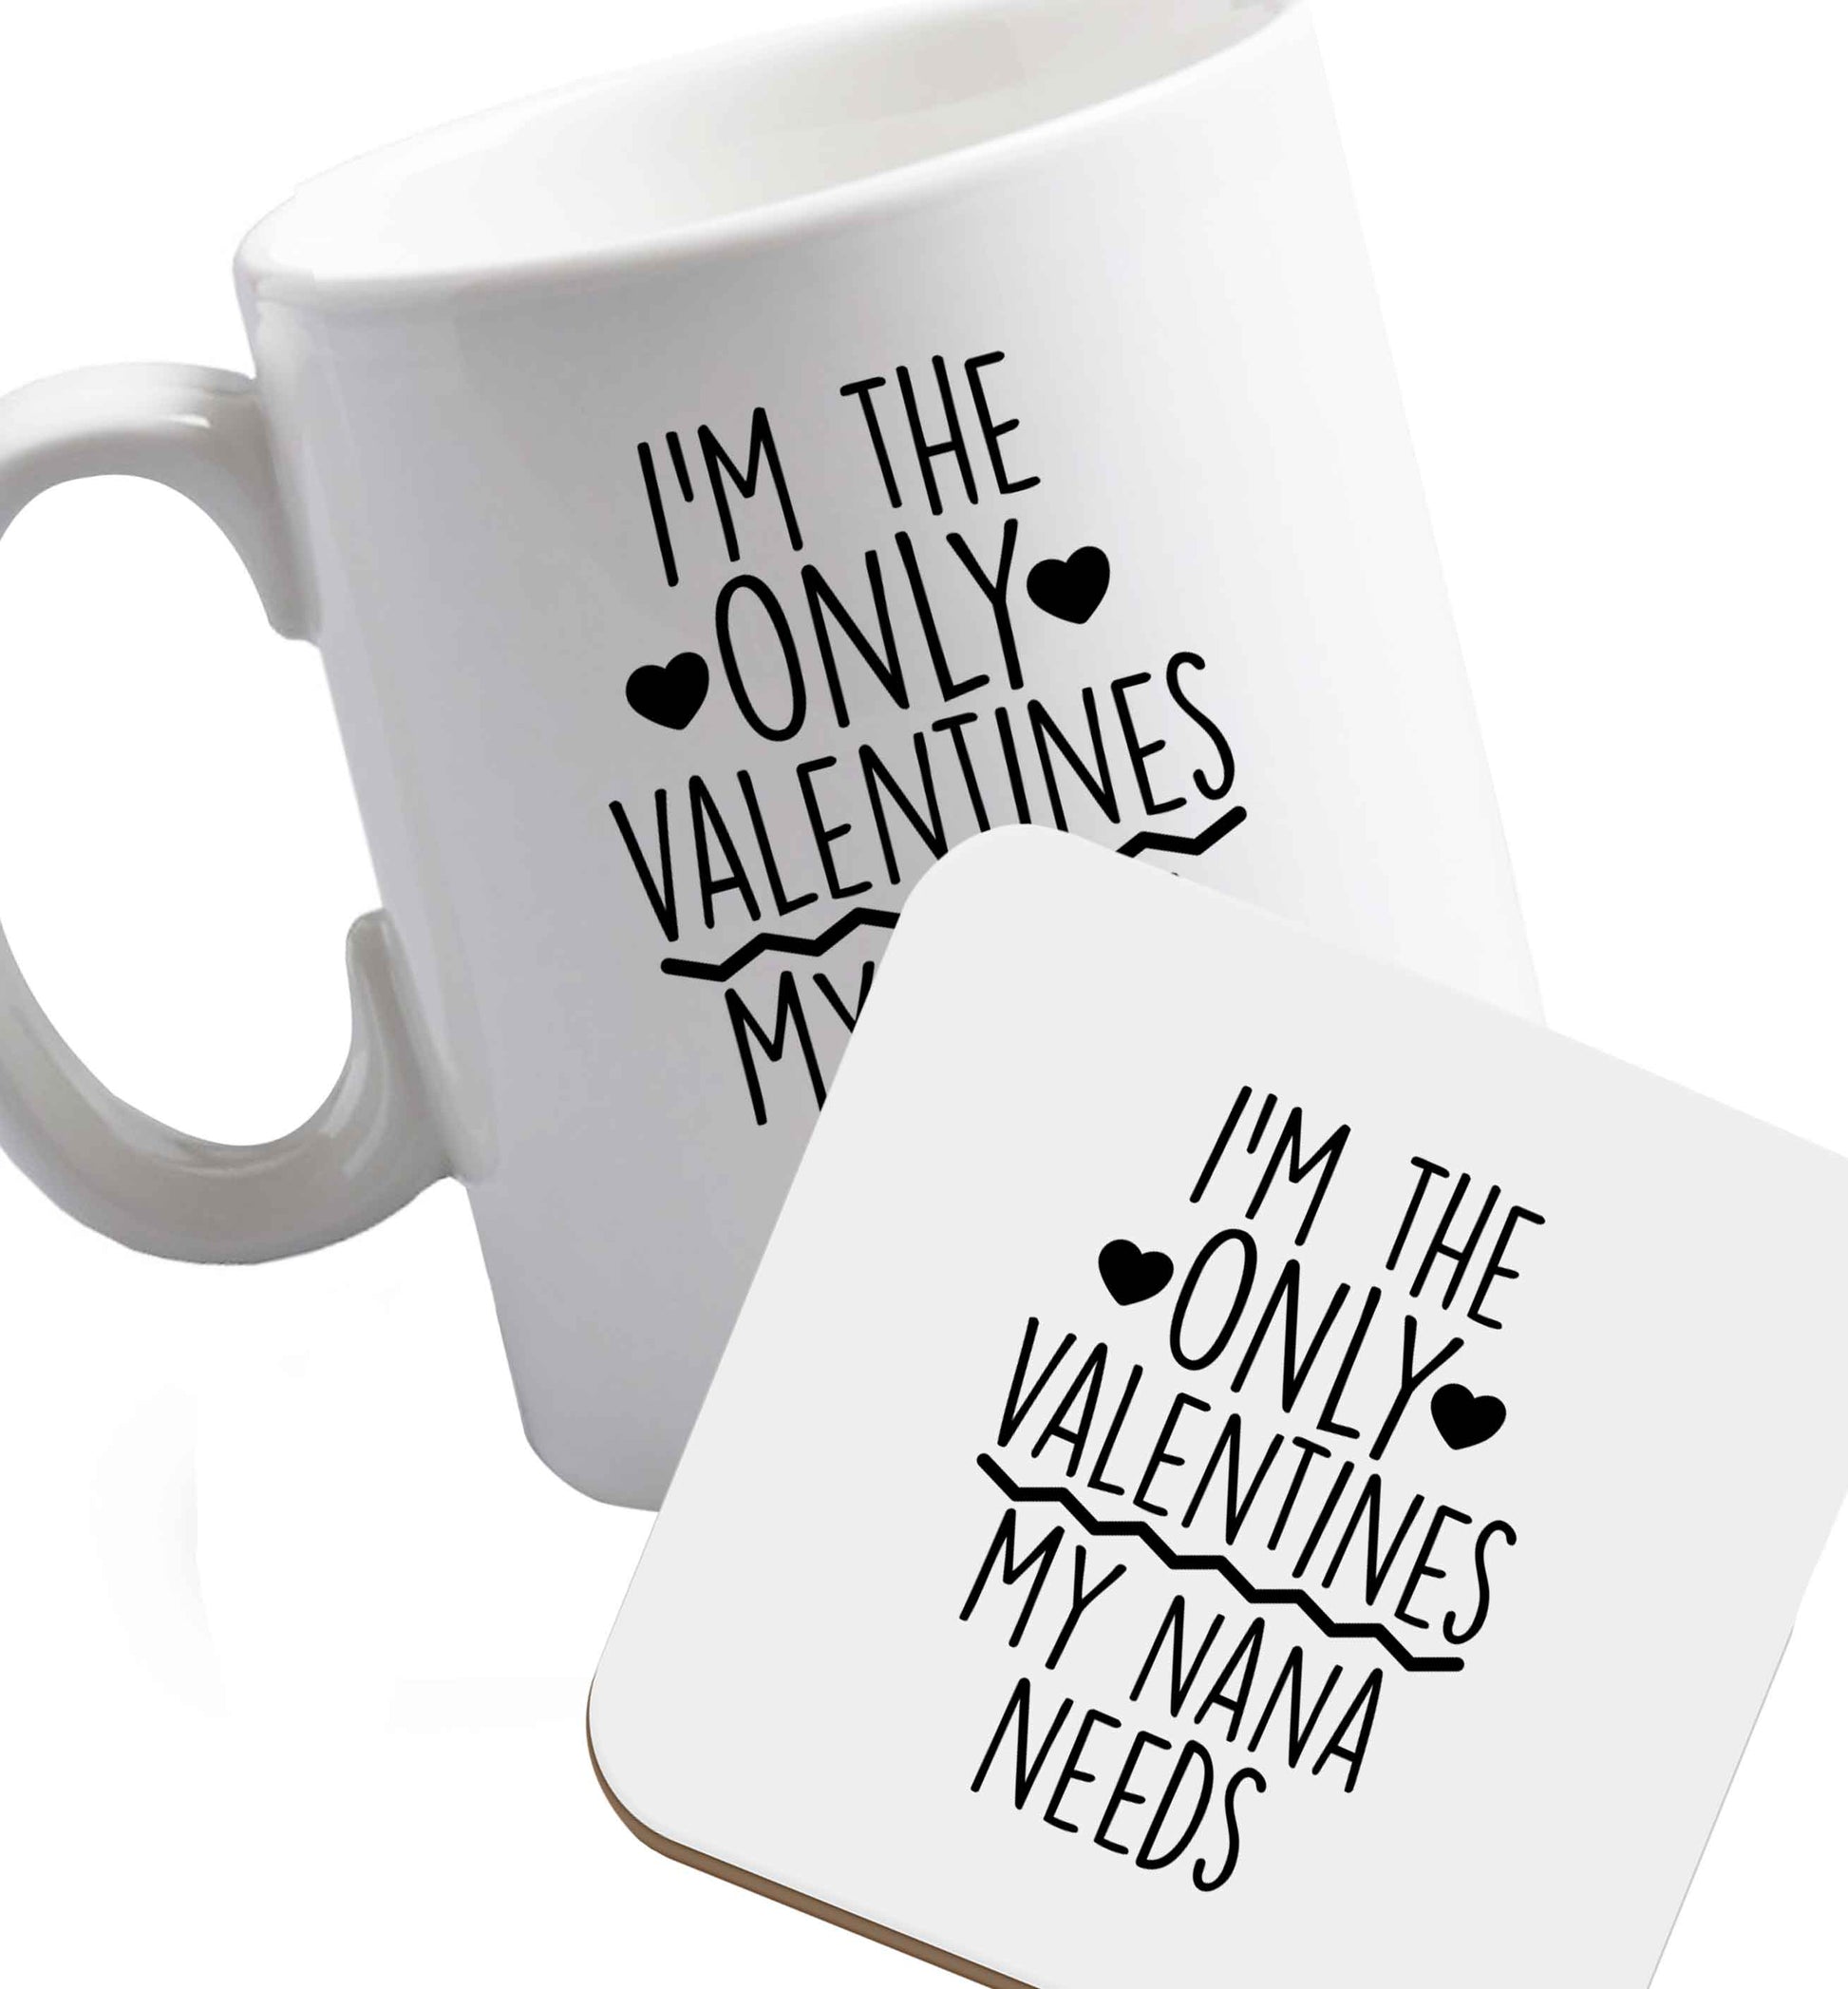 10 oz I'm the only valentines my nana needs ceramic mug and coaster set right handed